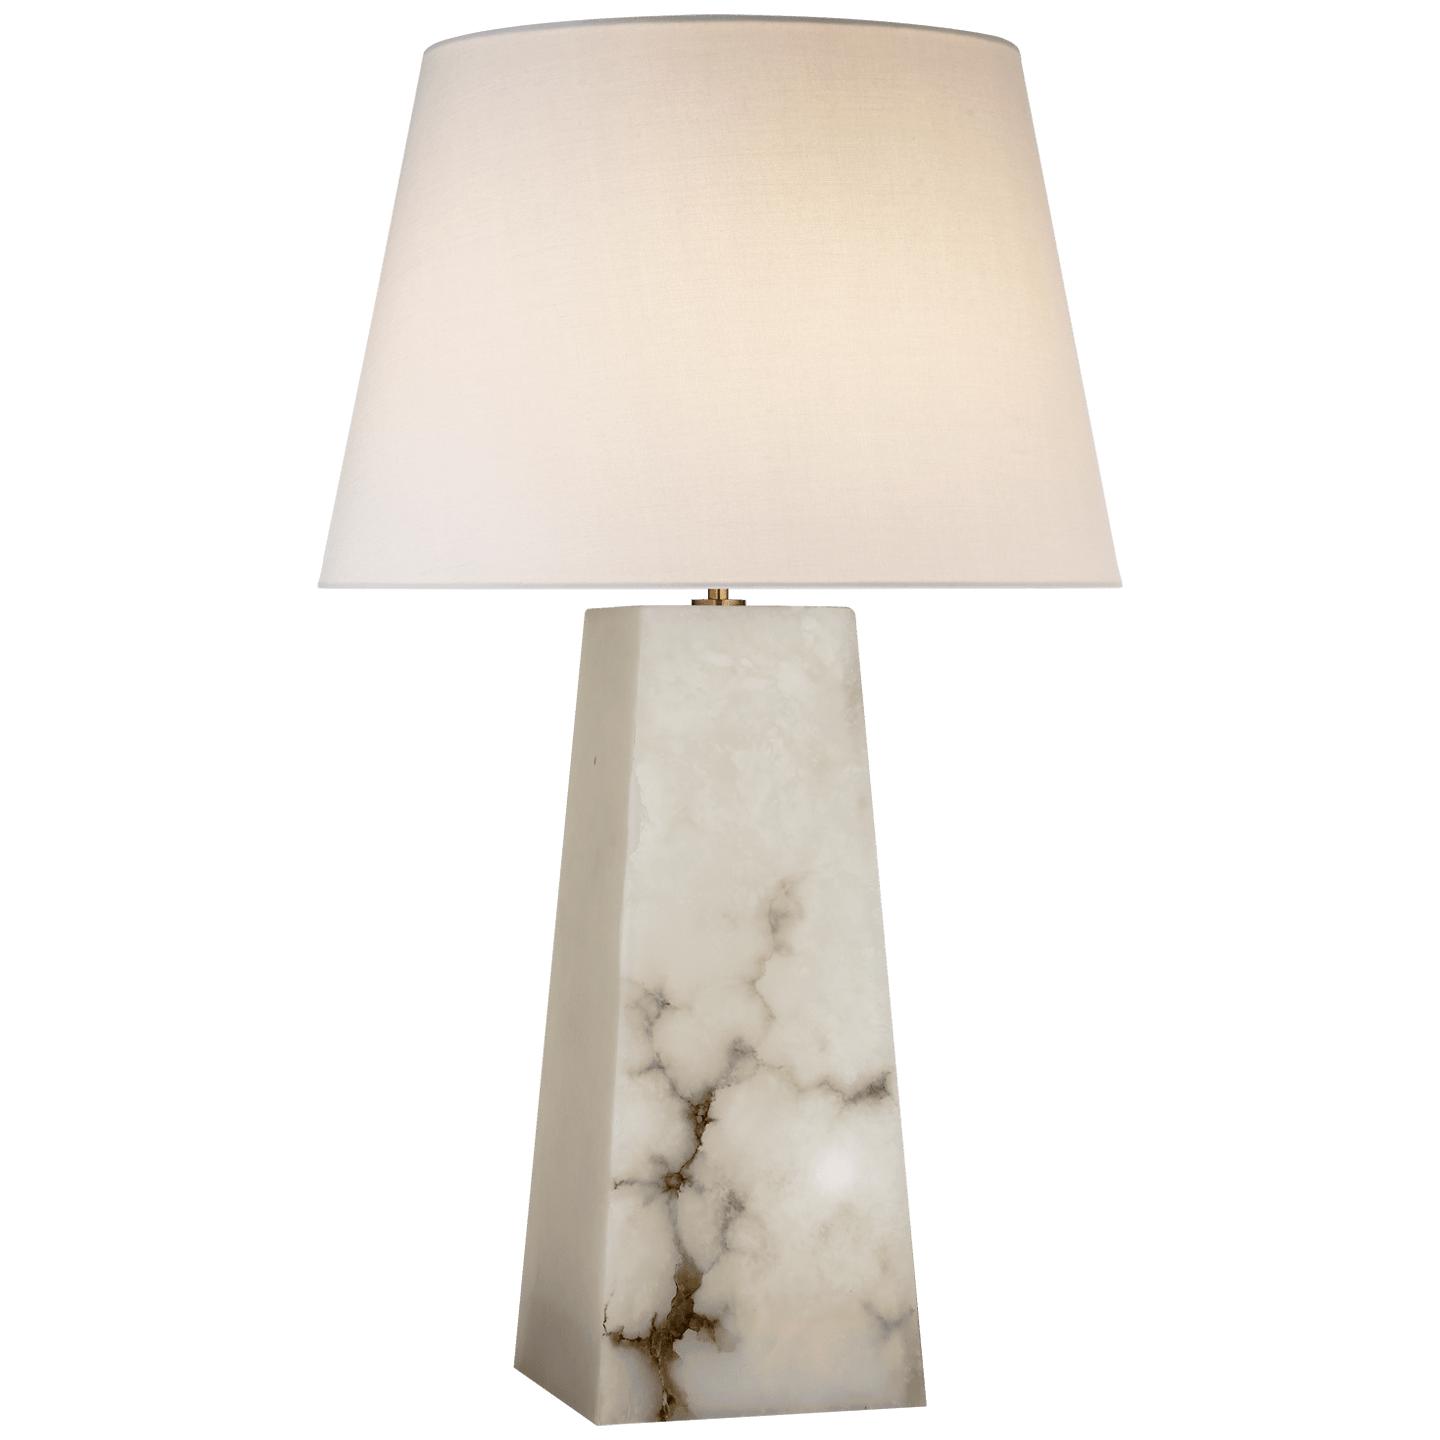 Купить Настольная лампа Evoke Large Table Lamp в интернет-магазине roooms.ru